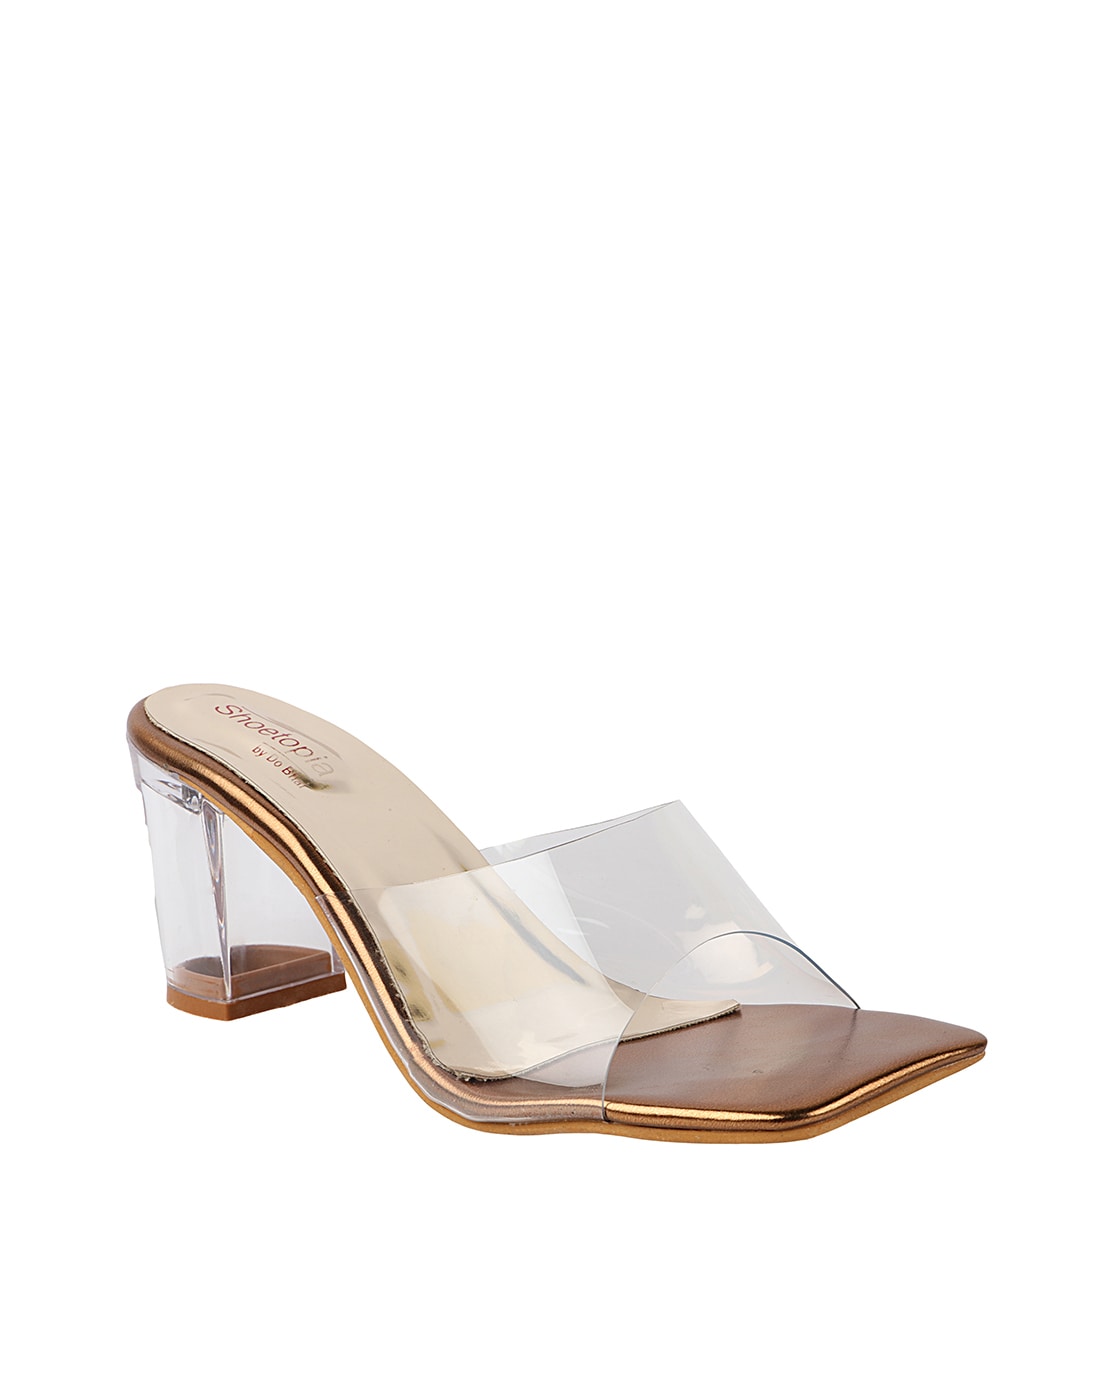 Alexandra Neel 37 women's sling back copper heels | Heels, Shoes women heels,  Sling back